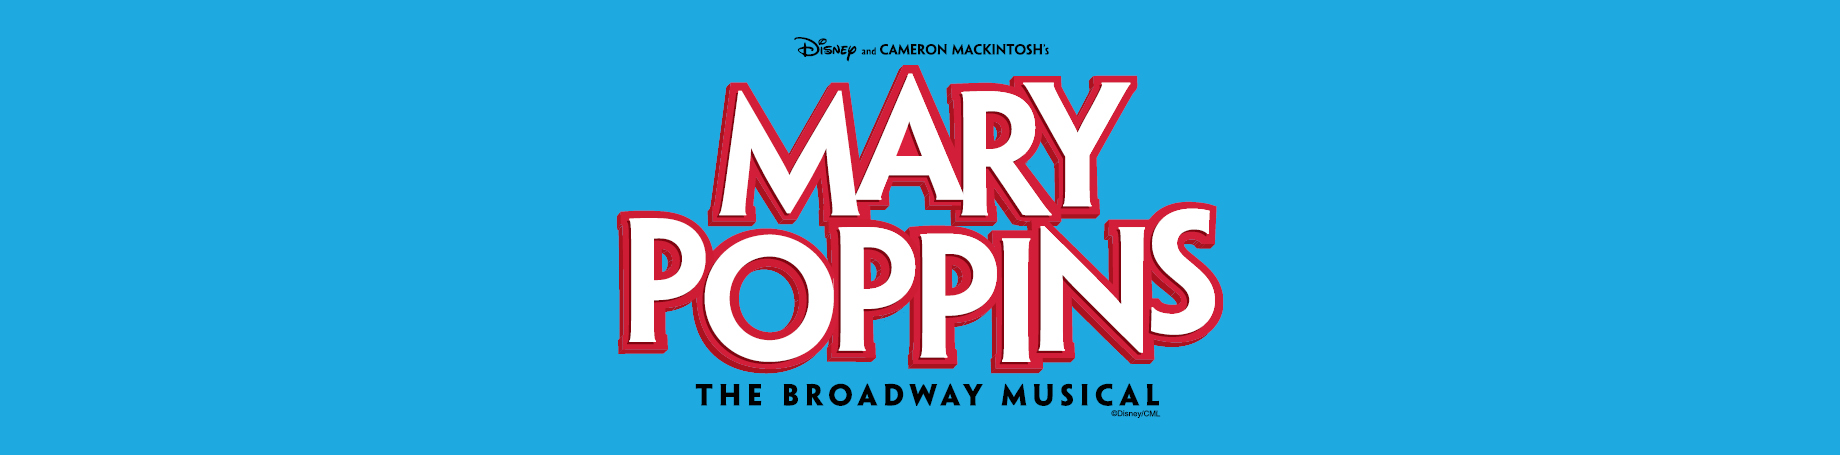 Dakota Academy of Performing Arts Presents: Disney and Cameron Mackintosh's Mary Poppins